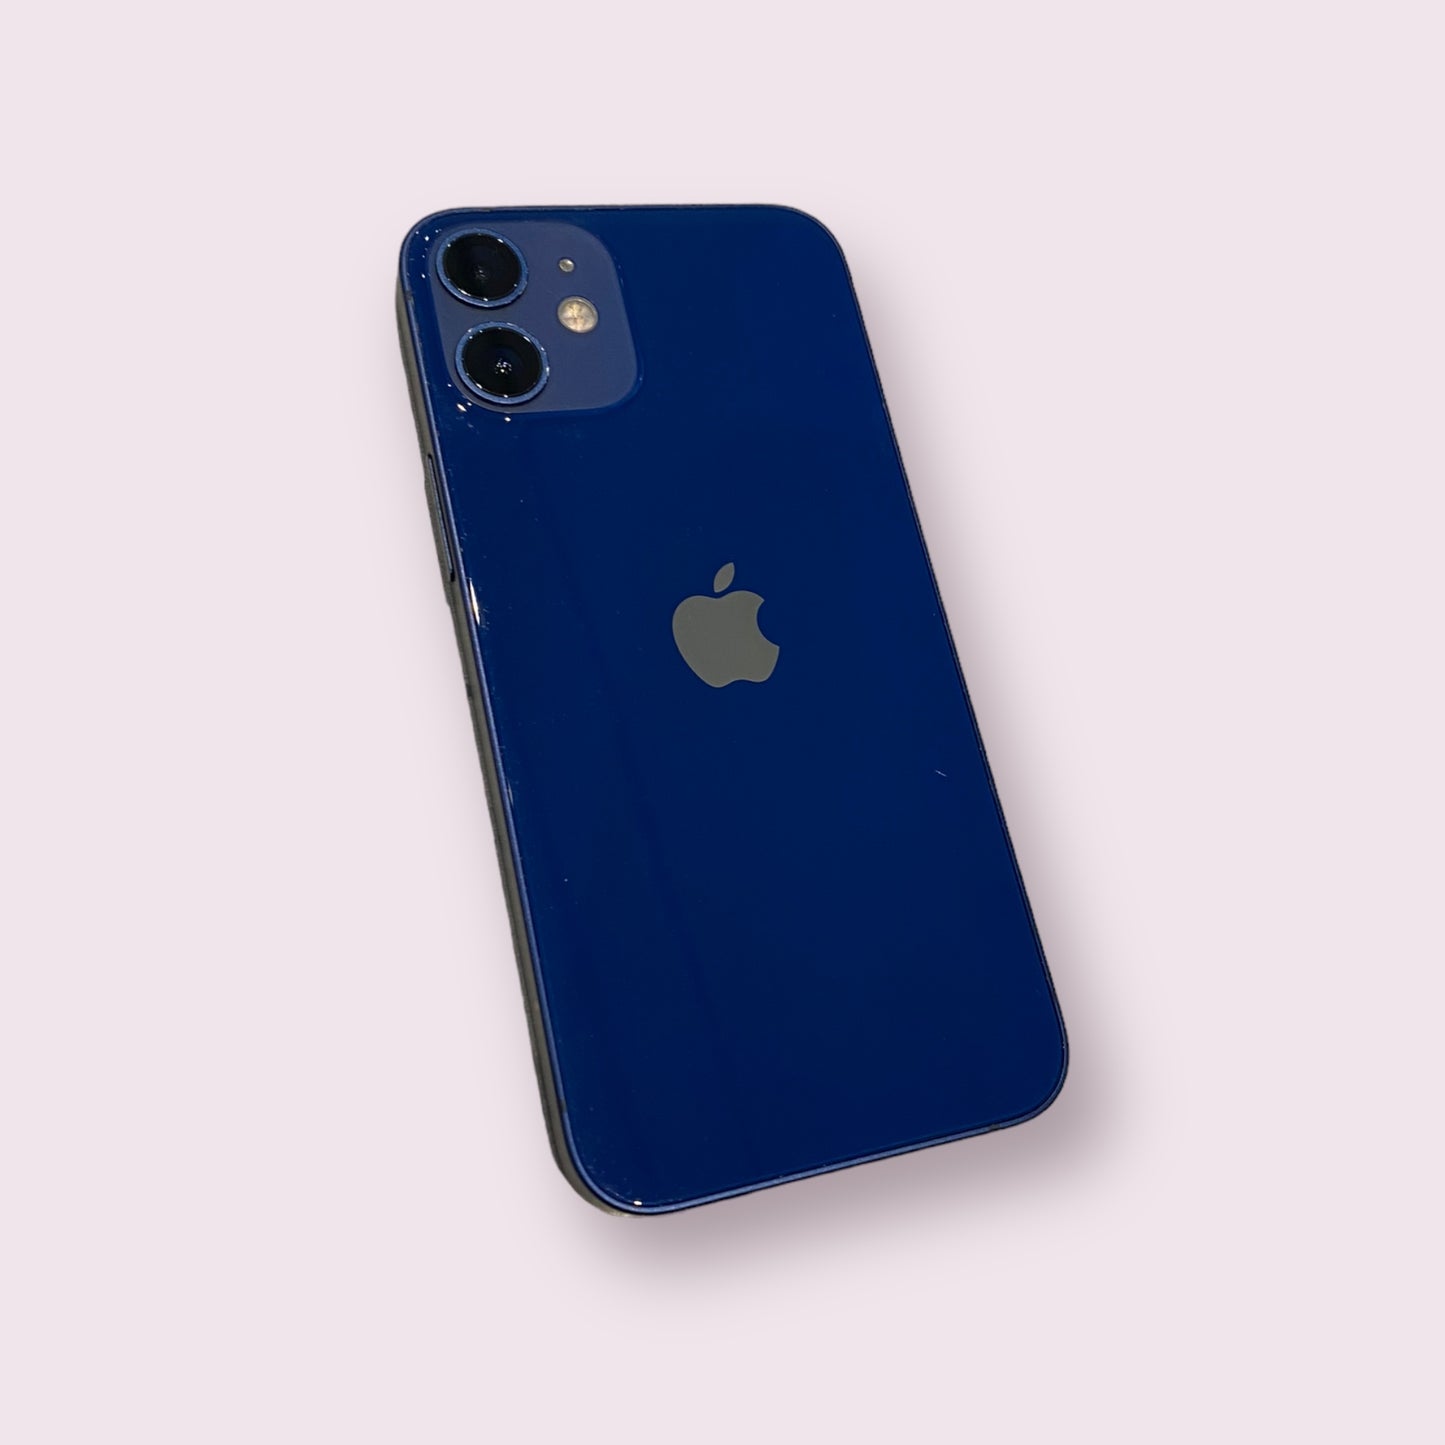 Apple iPhone 12 Mini 64GB Blue - Unlocked - Grade B